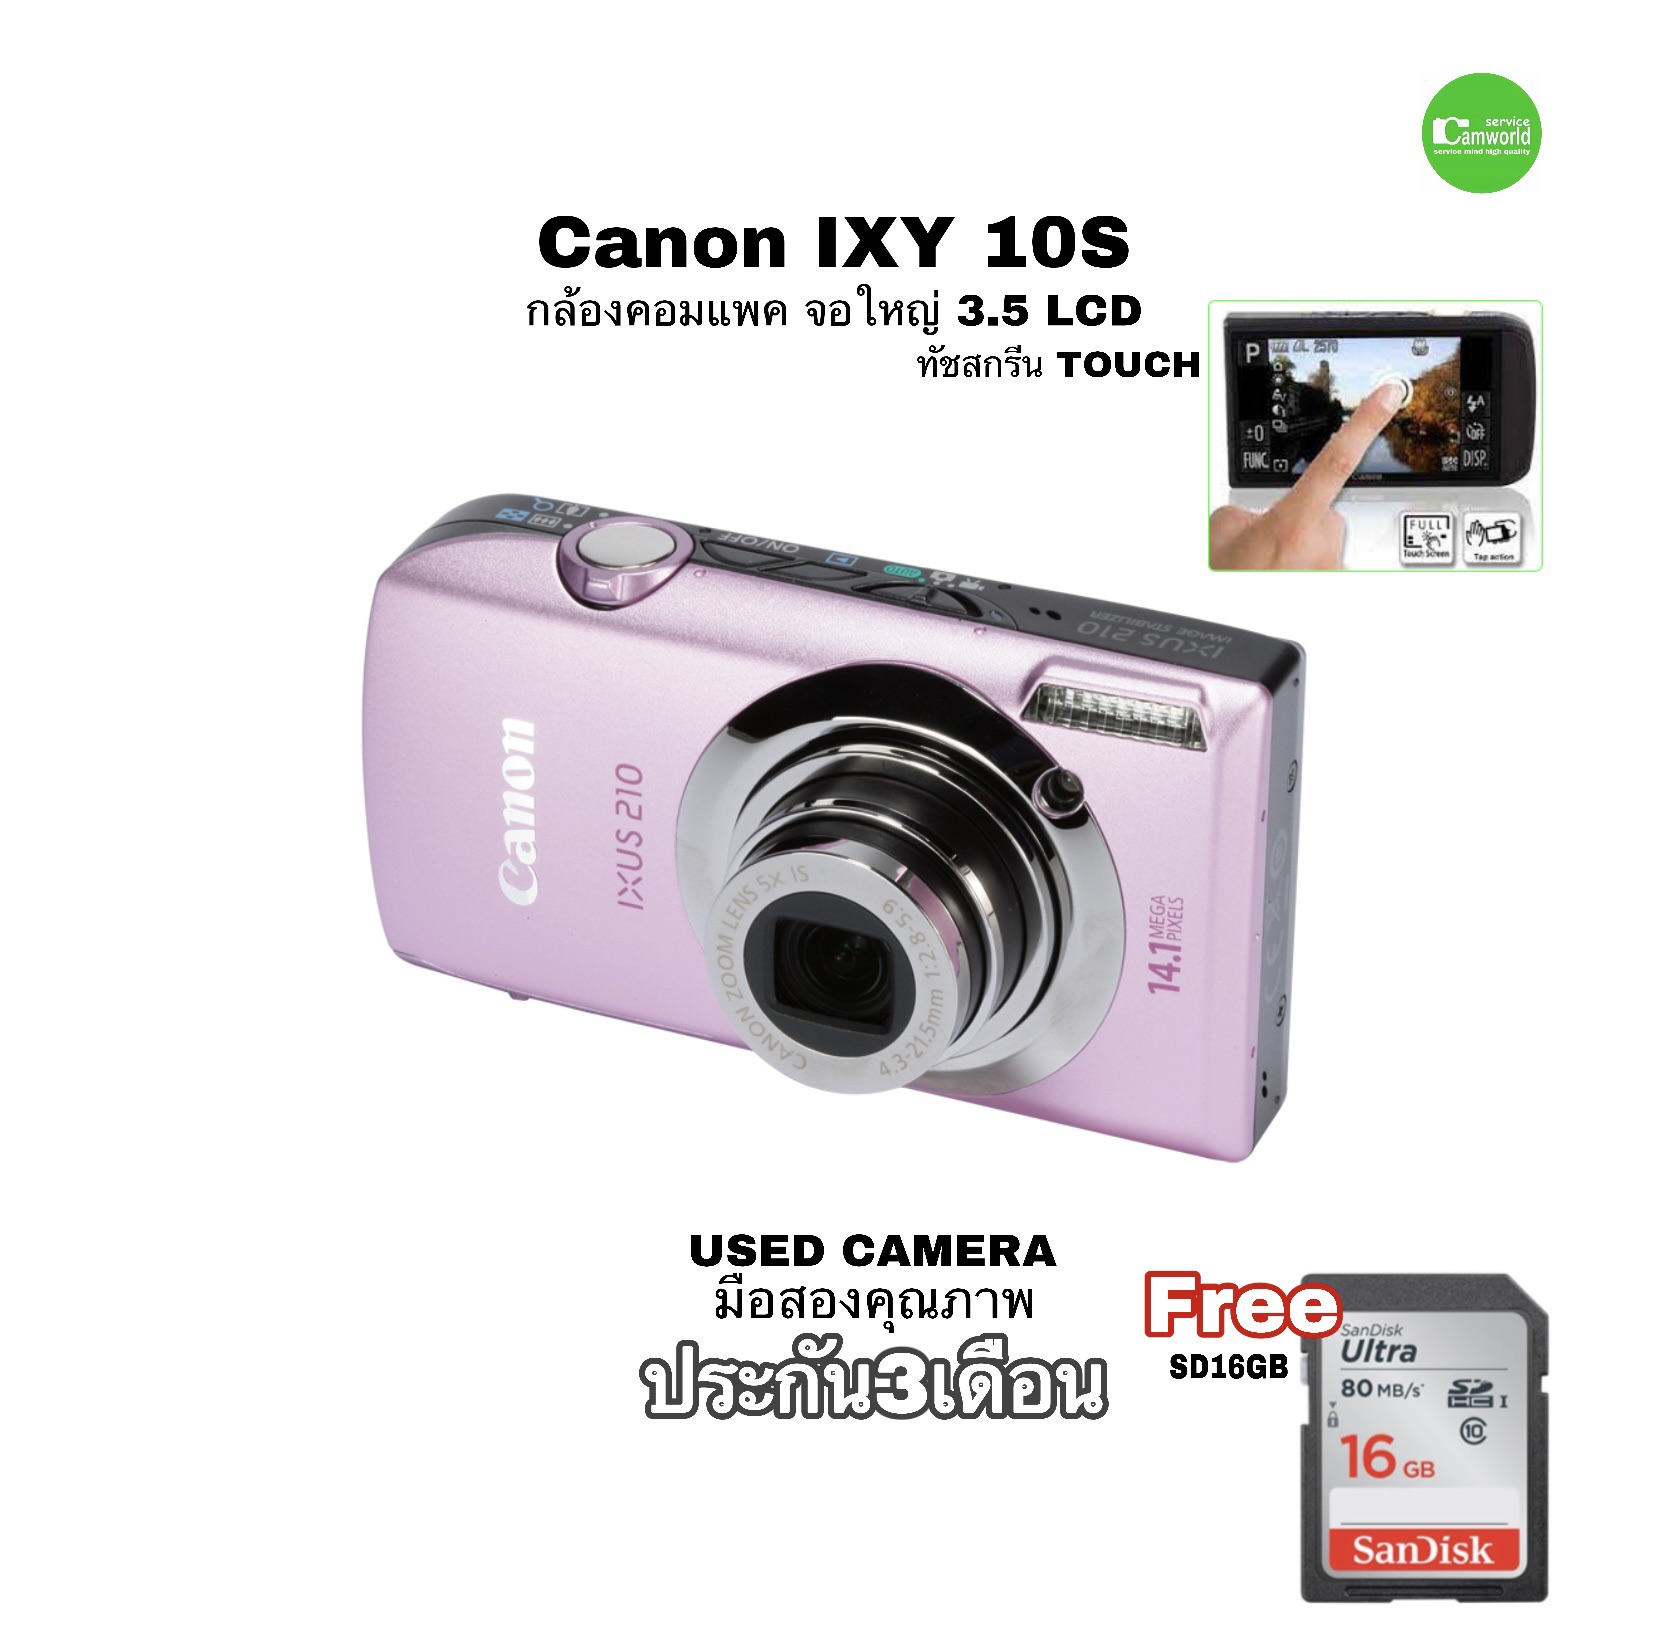 Canon IXY 10S - デジタルカメラ